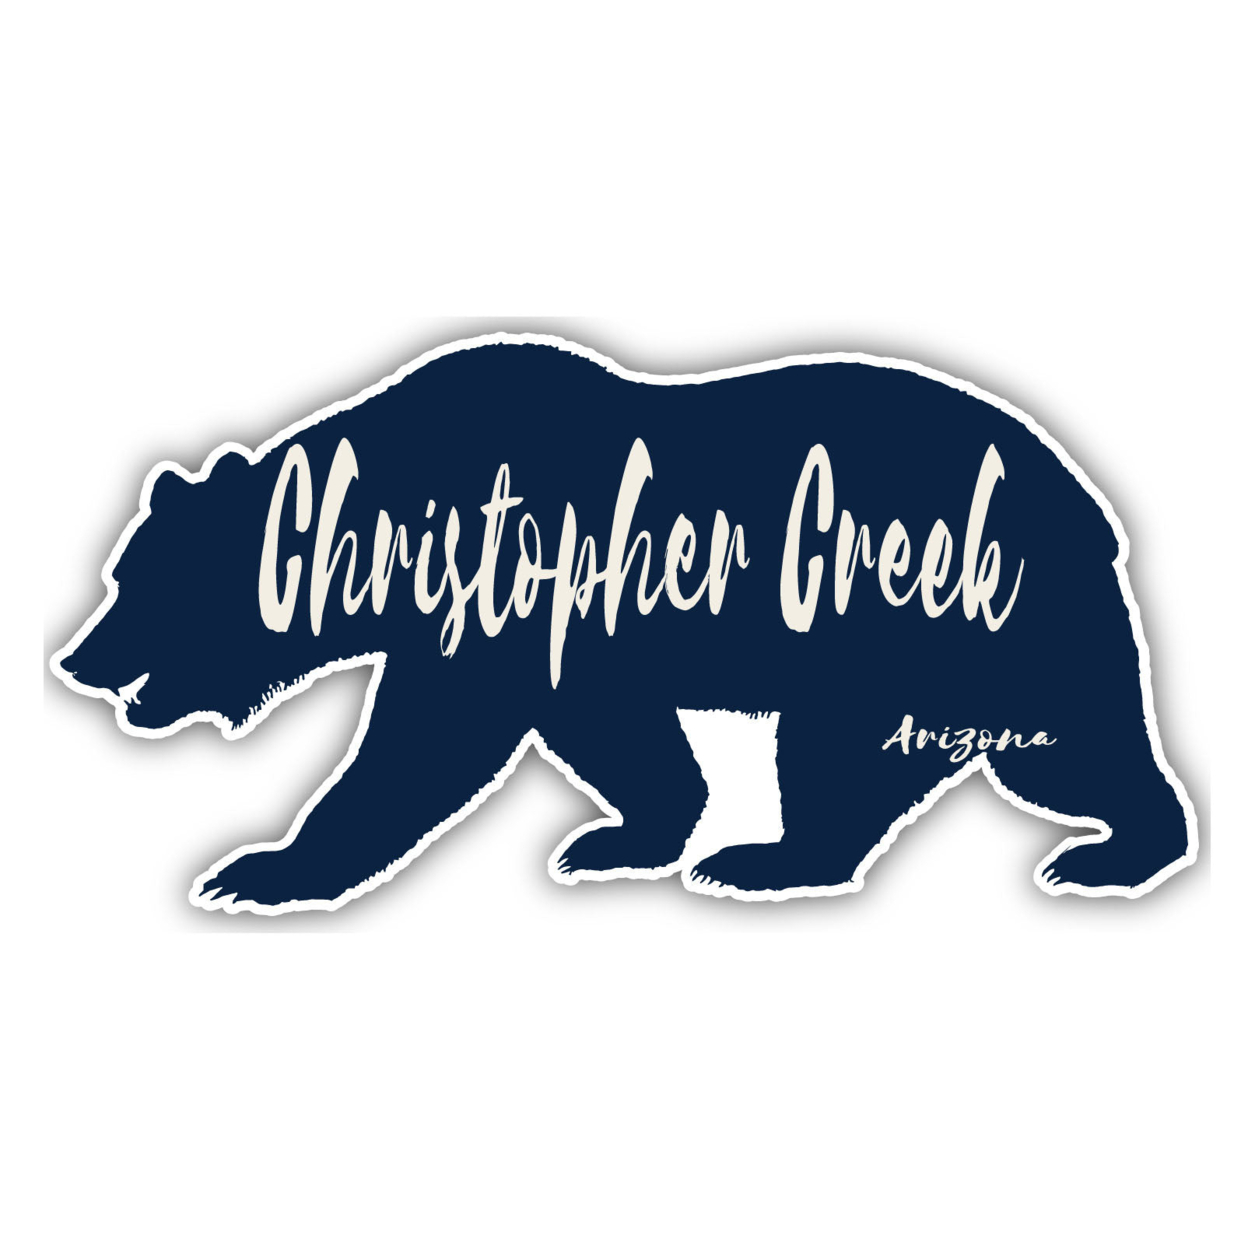 Christopher Creek Arizona Souvenir Decorative Stickers (Choose Theme And Size) - 4-Pack, 4-Inch, Tent